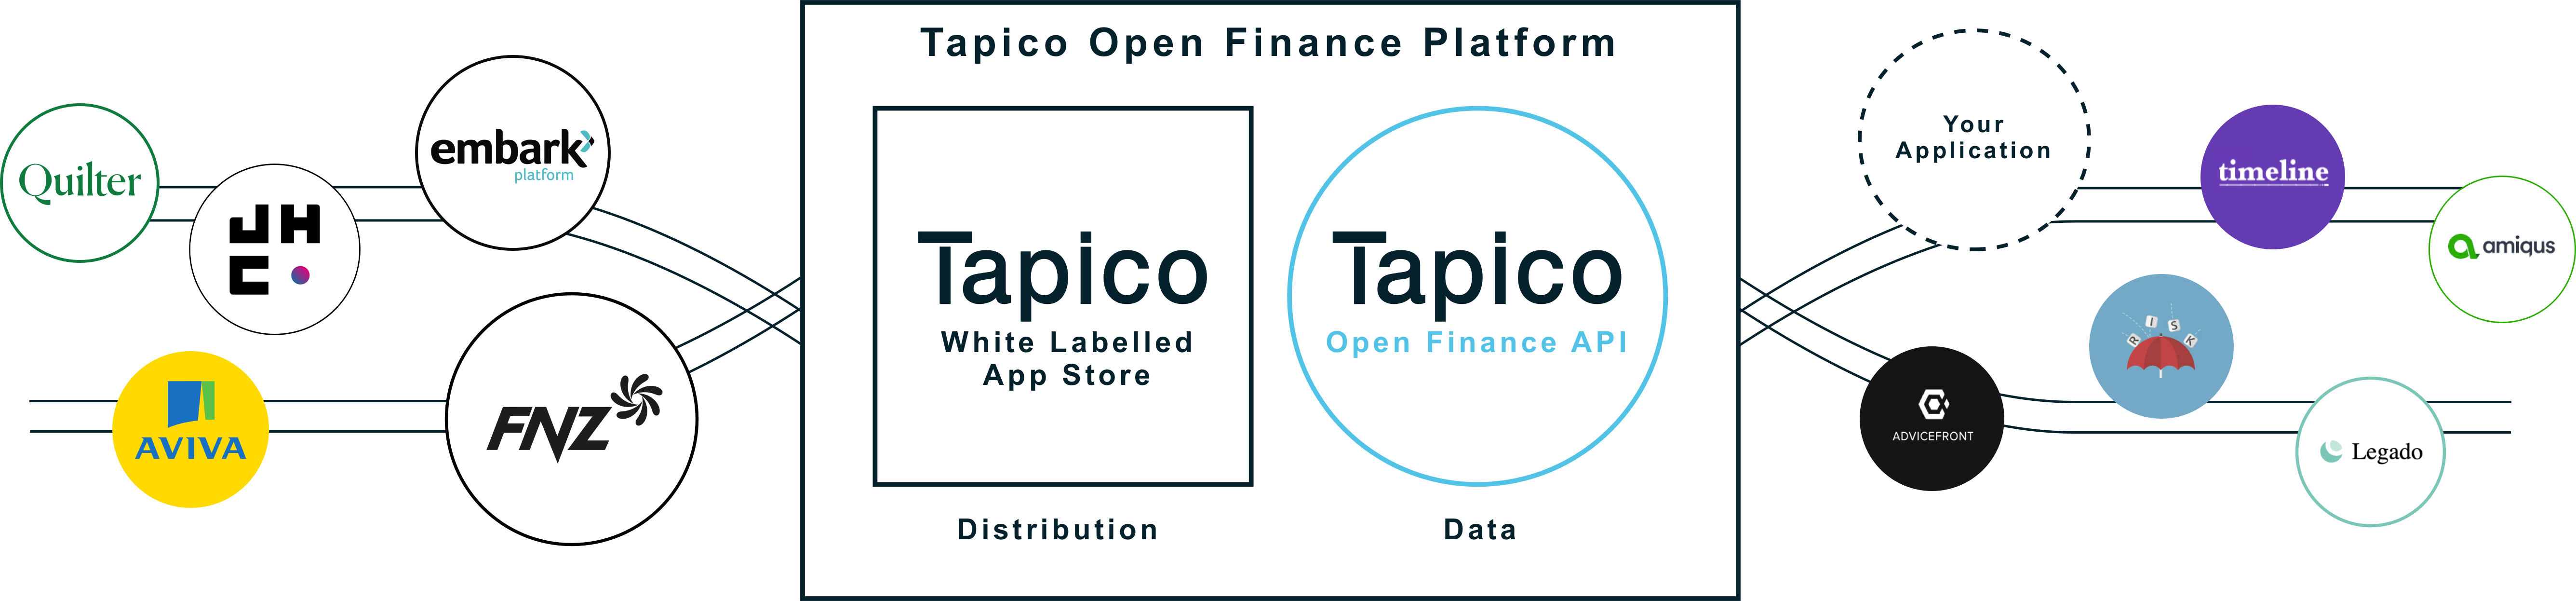 Tapico Open Finance Platform - Data & Distribution via Tapico's white labelled App Store.